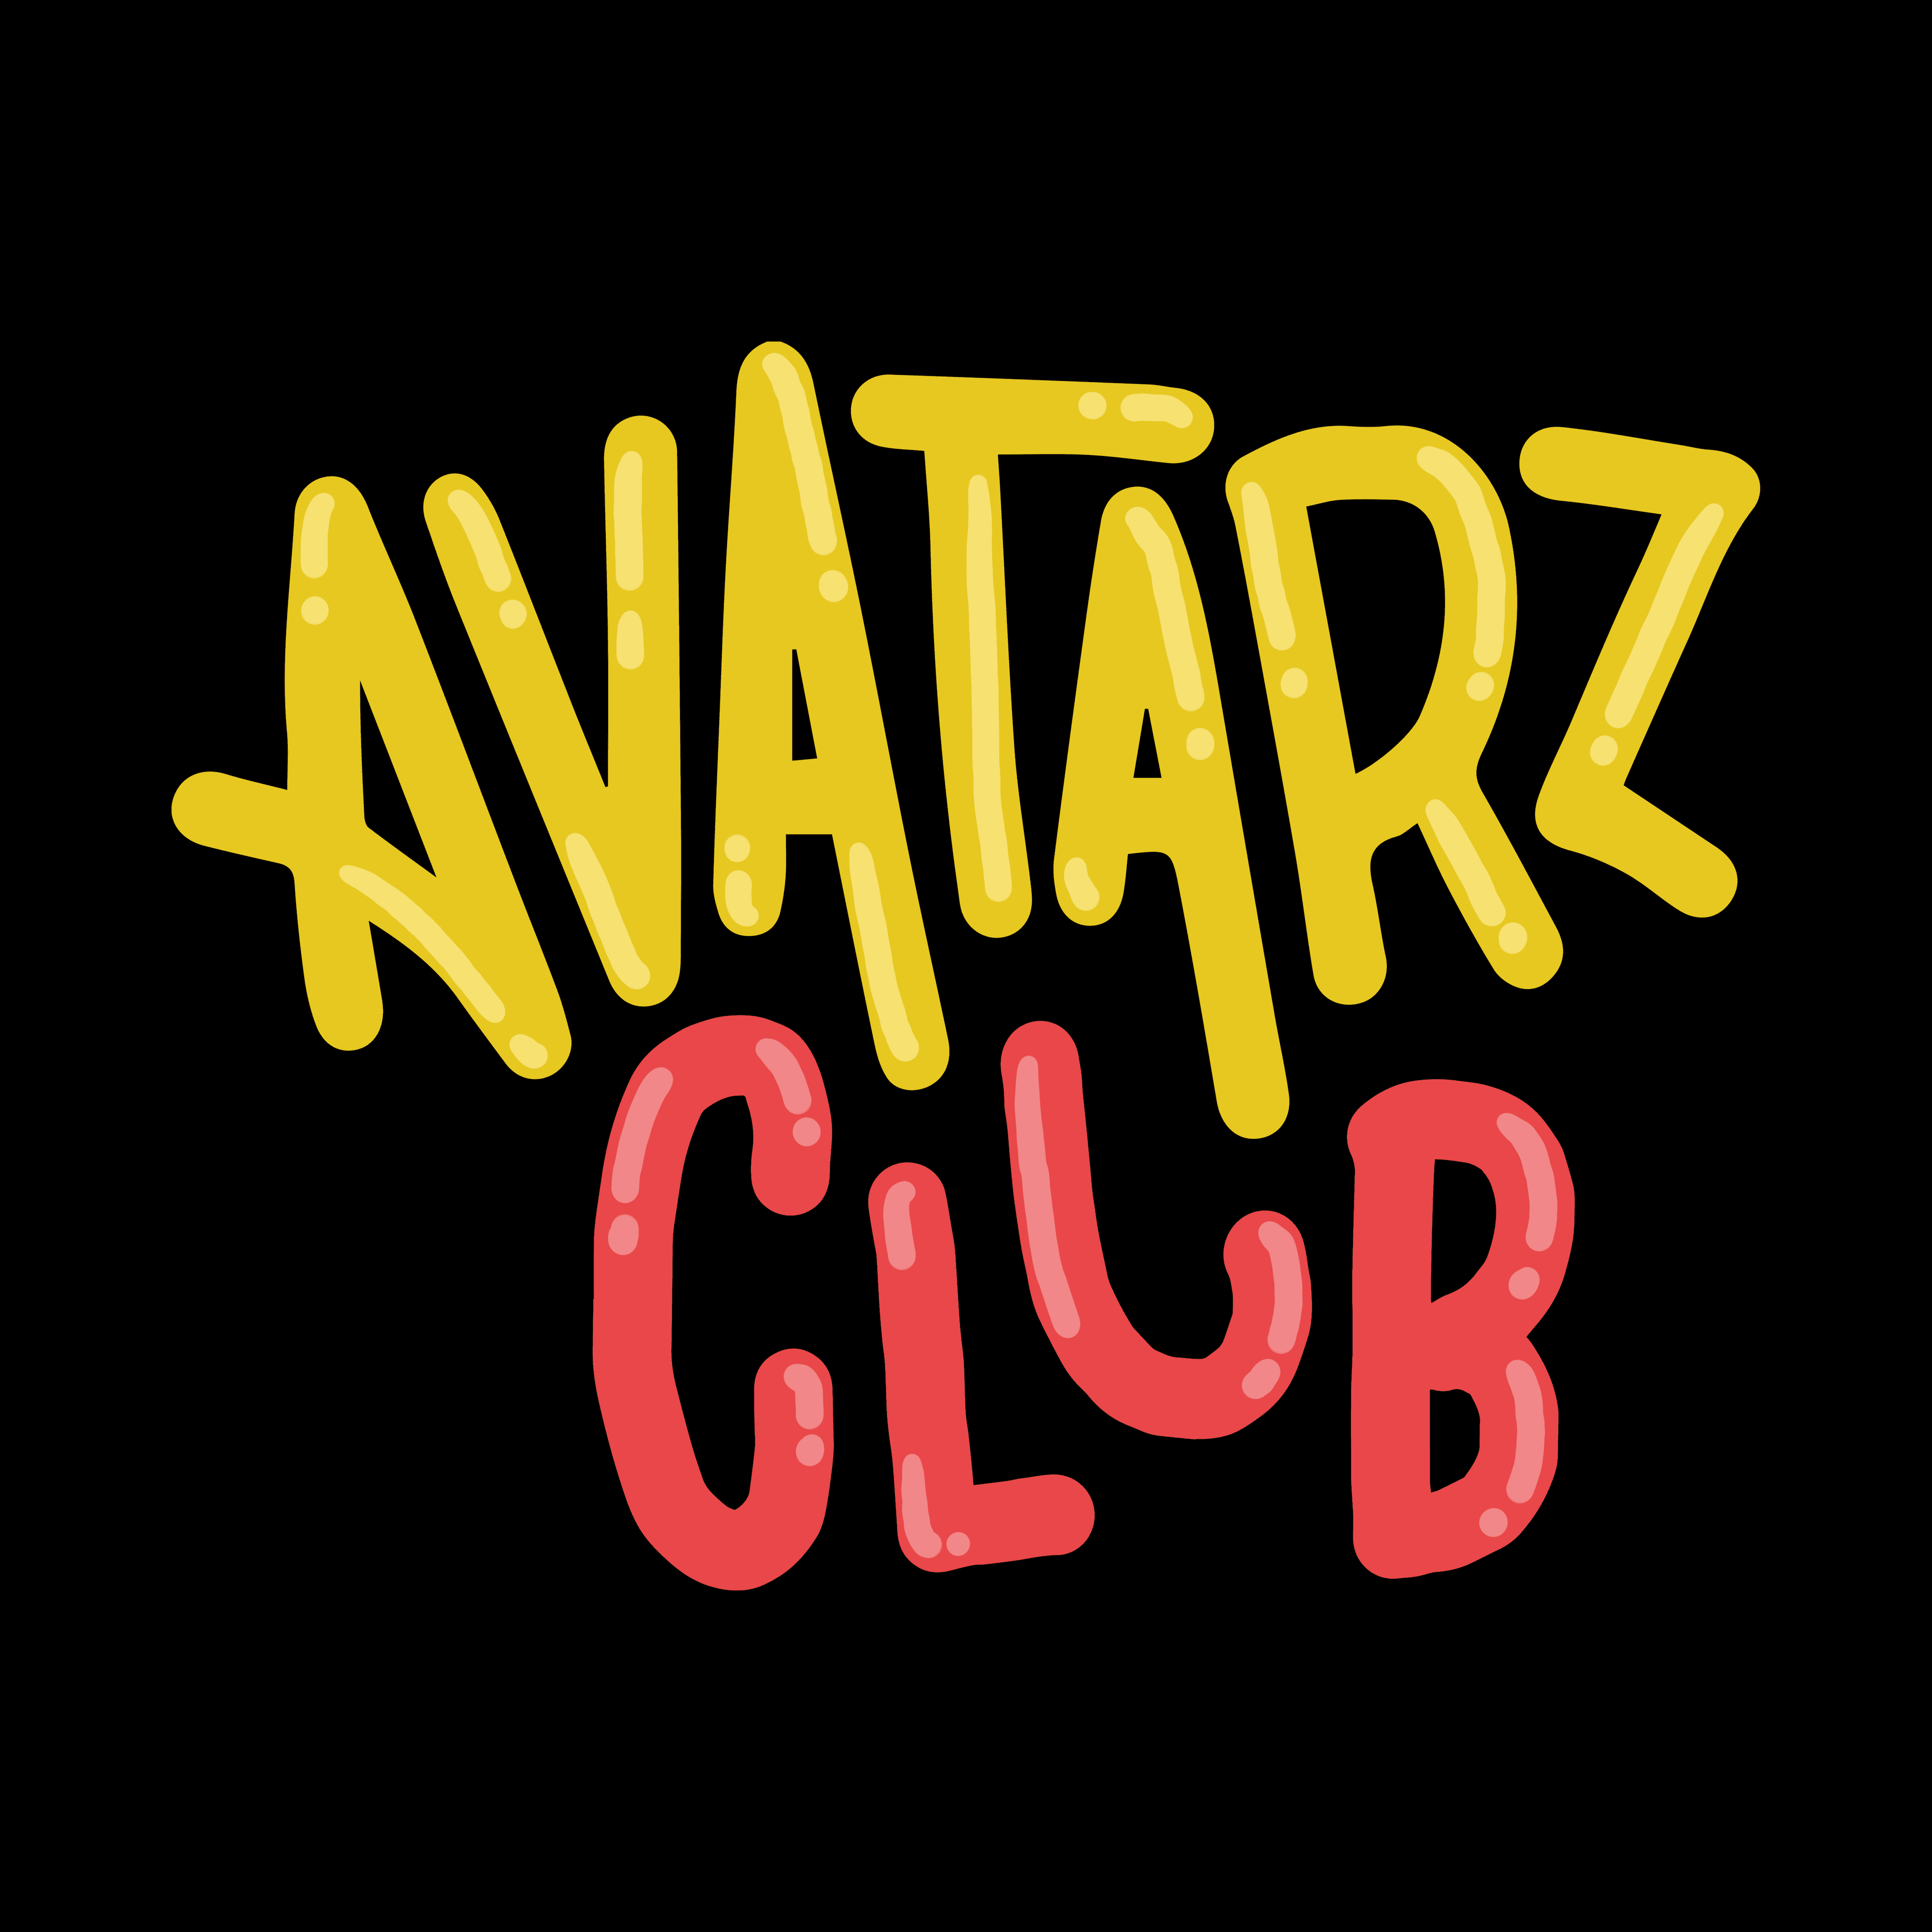 AvatarzClub